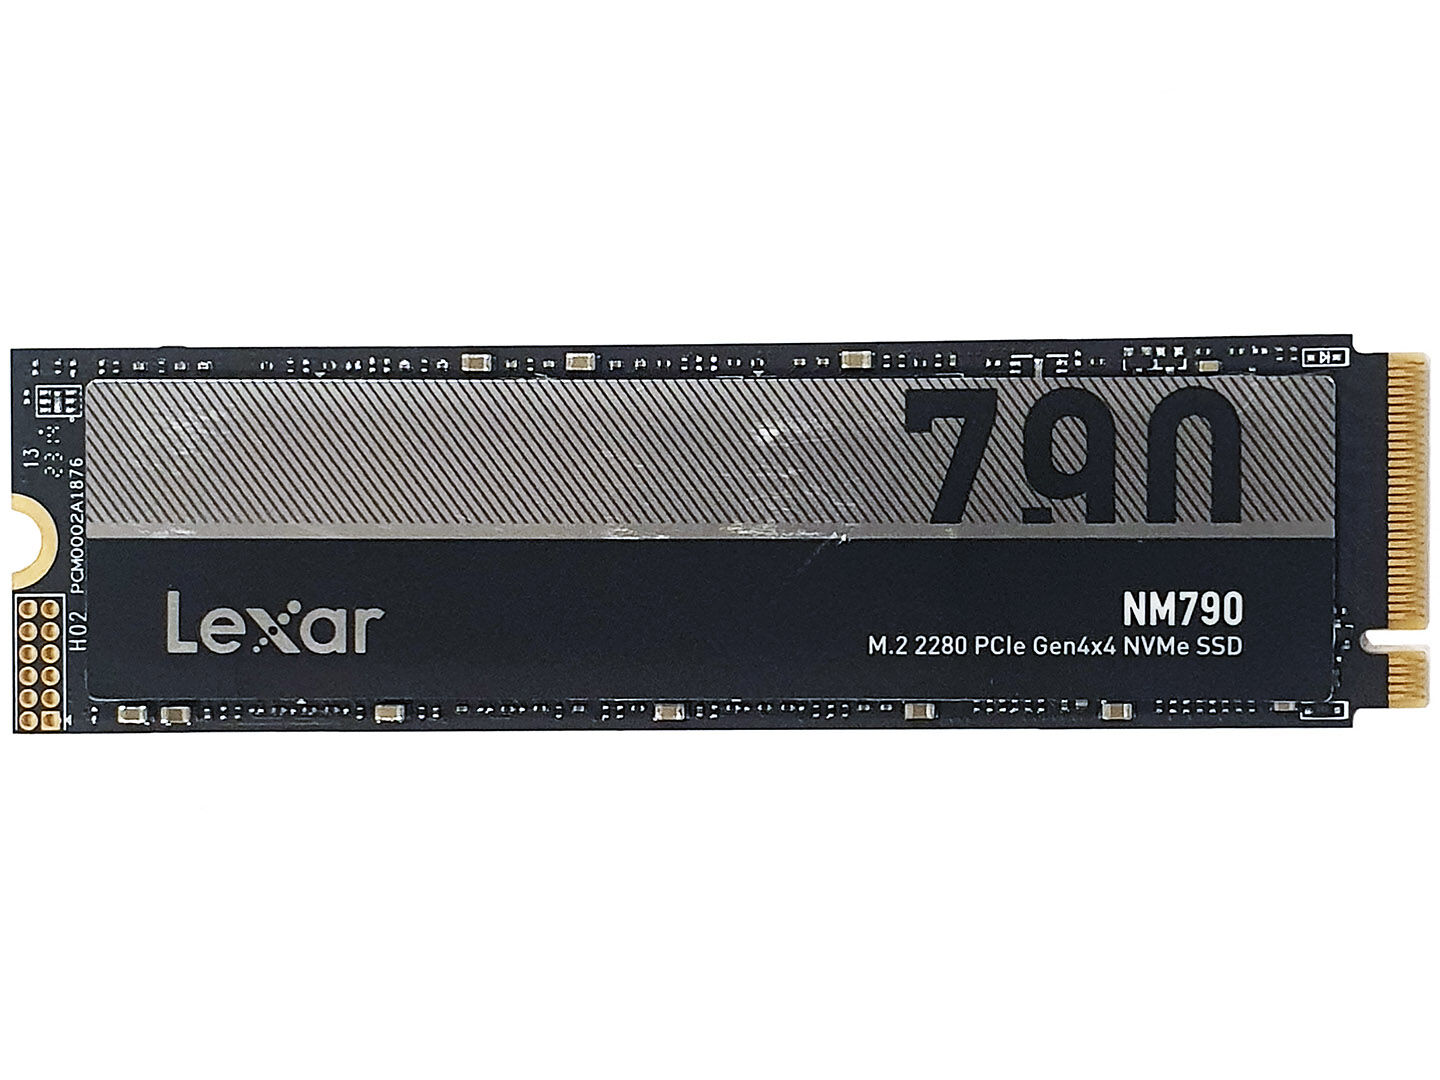 Lexar NM790 4TB PCIe Gen4 NVMe SSD Review - Page 2 of 3